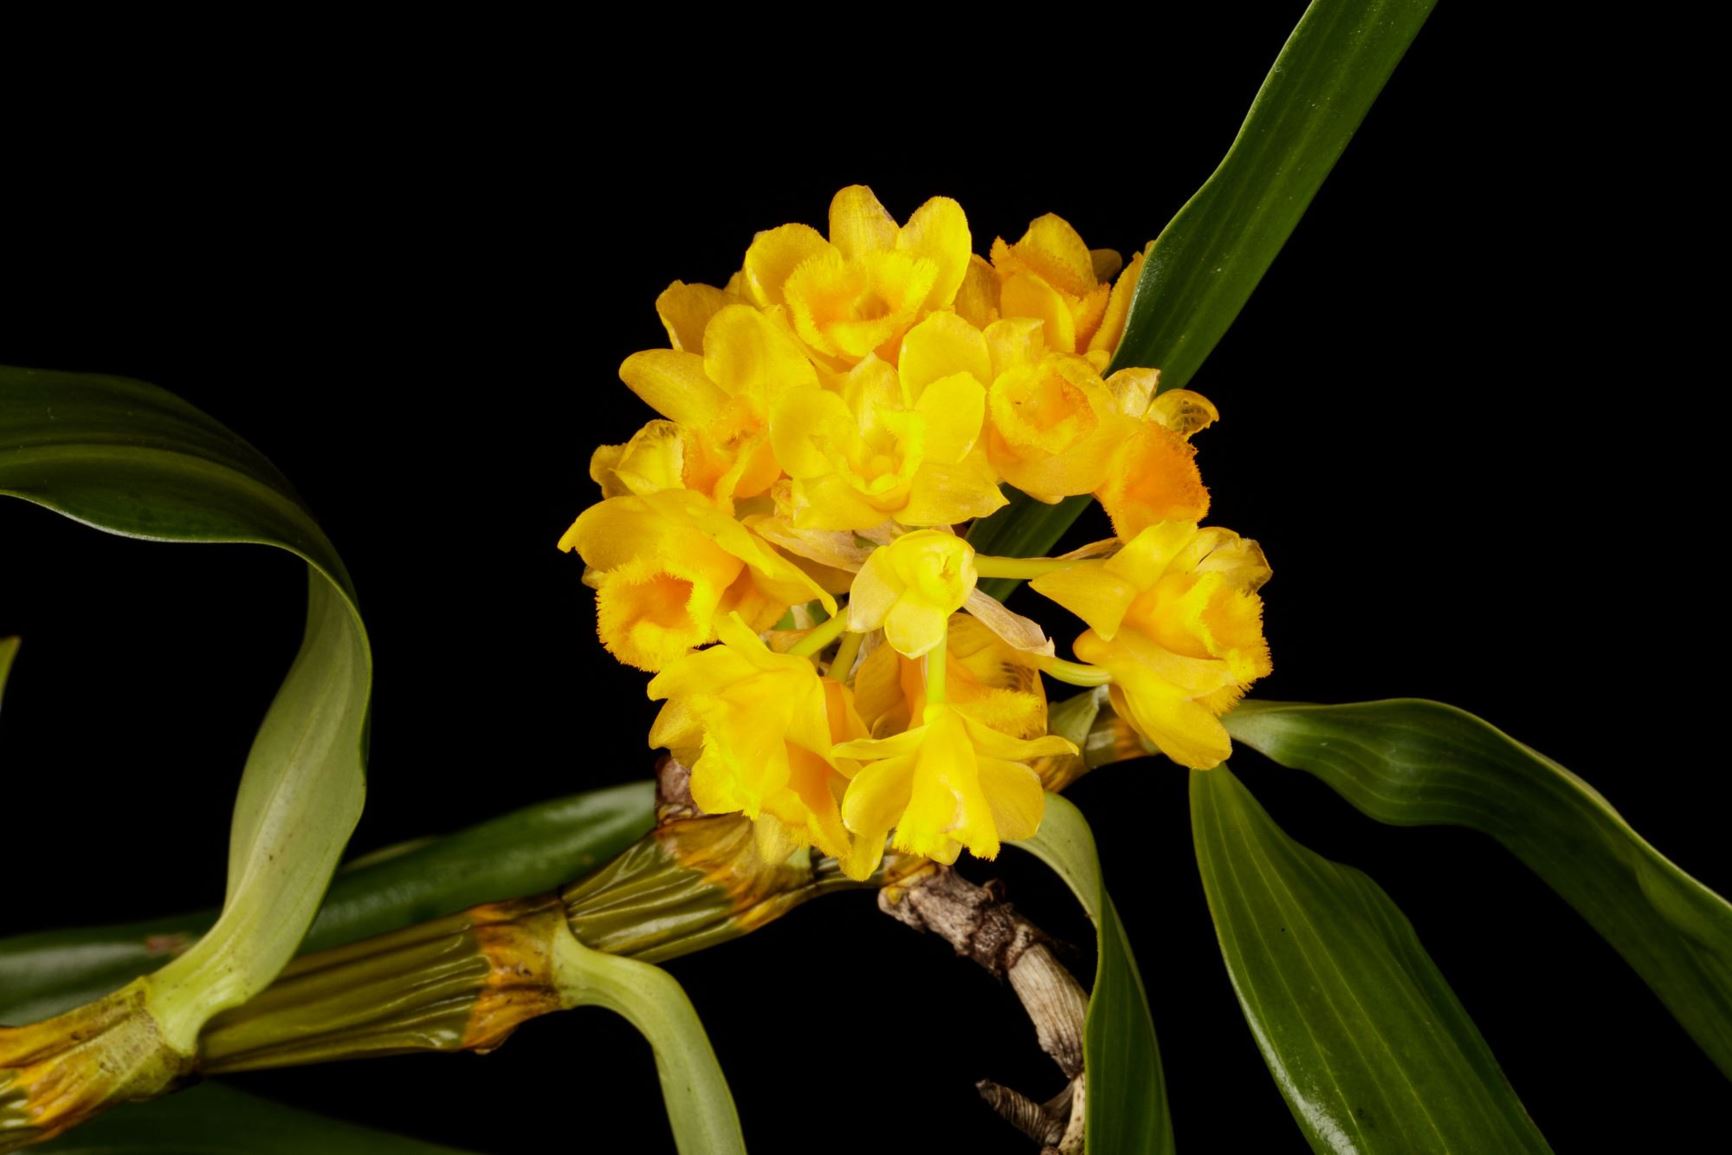 Dendrobium densiflorum - The Densely Flowered Dendrobium, Pineapple Orchid